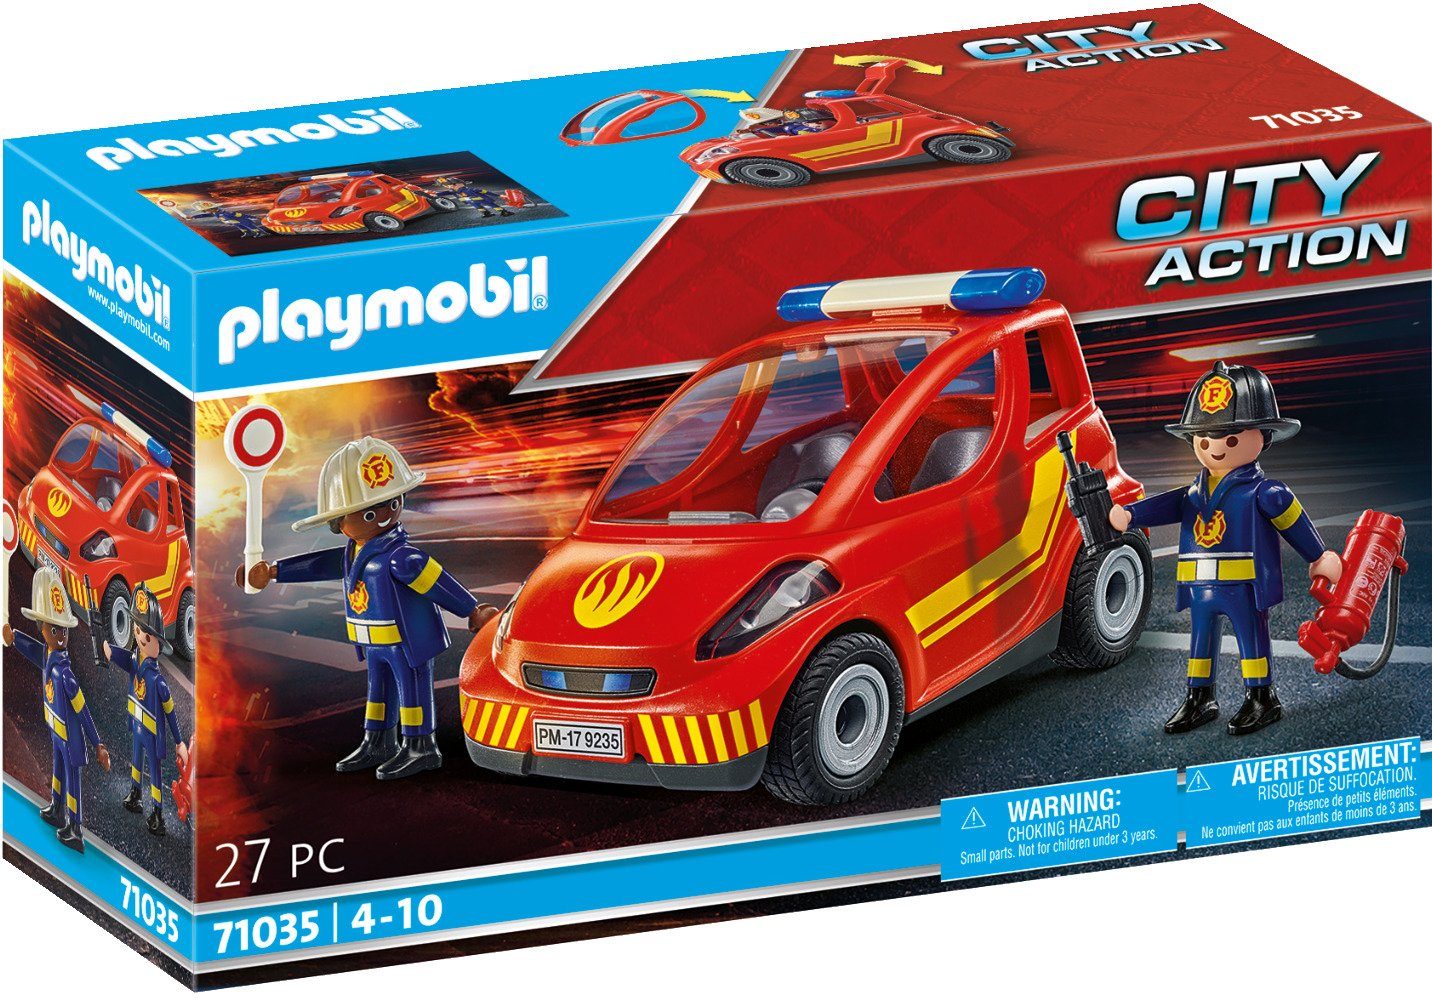 Playmobil® Konstruktions-Spielset Feuerwehr Kleinwagen (71035), City-Action, (27 St), Made in Germany